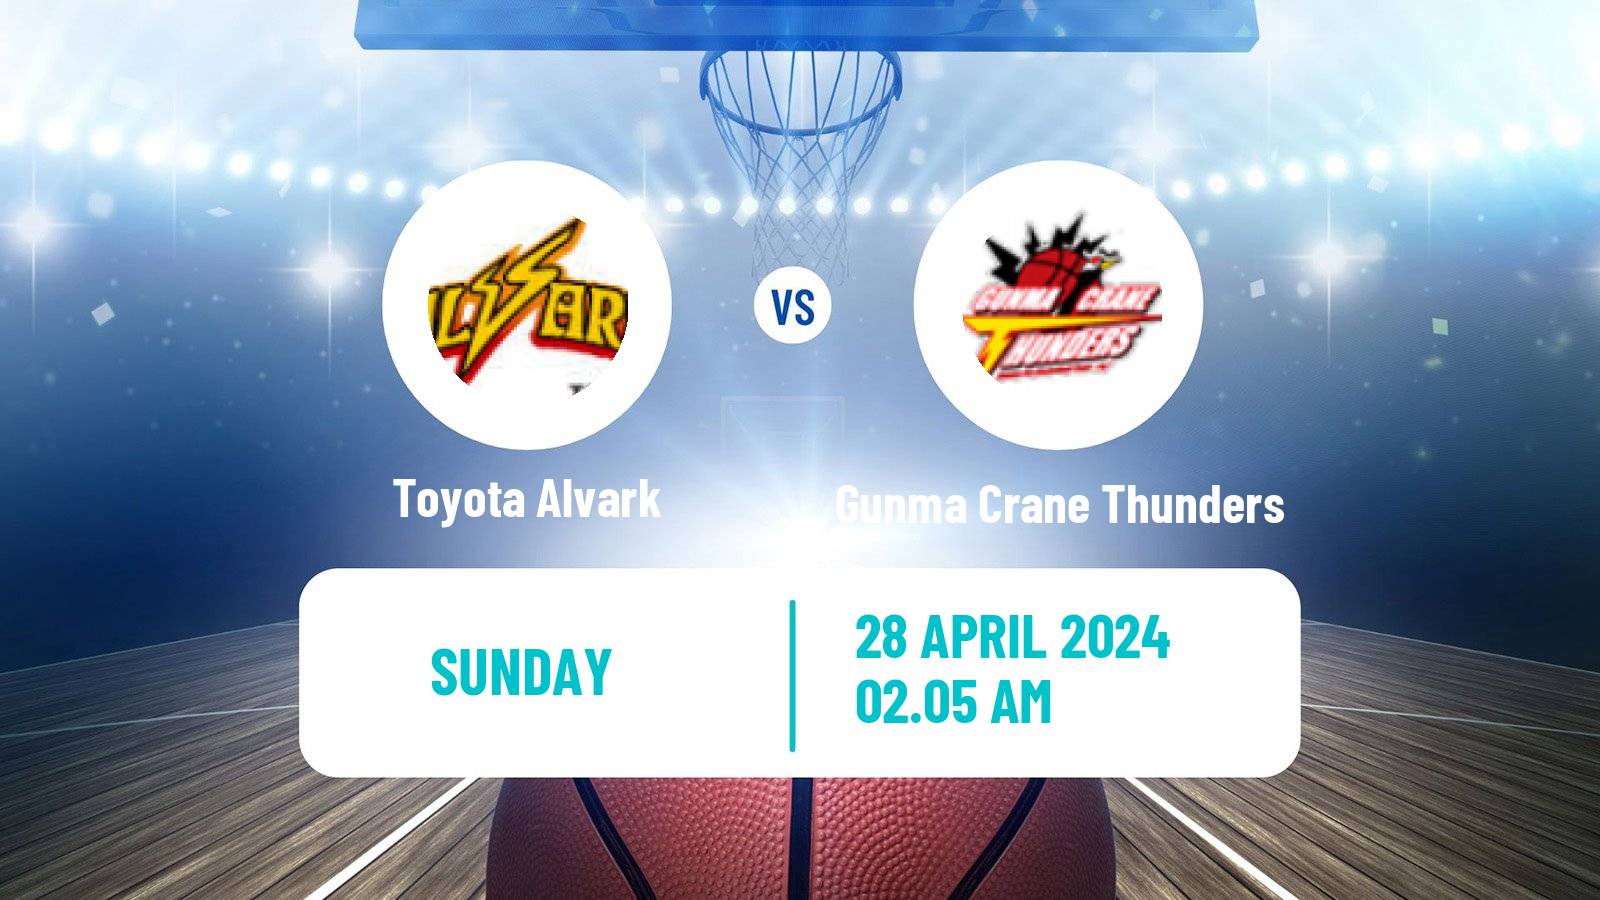 Basketball BJ League Toyota Alvark - Gunma Crane Thunders